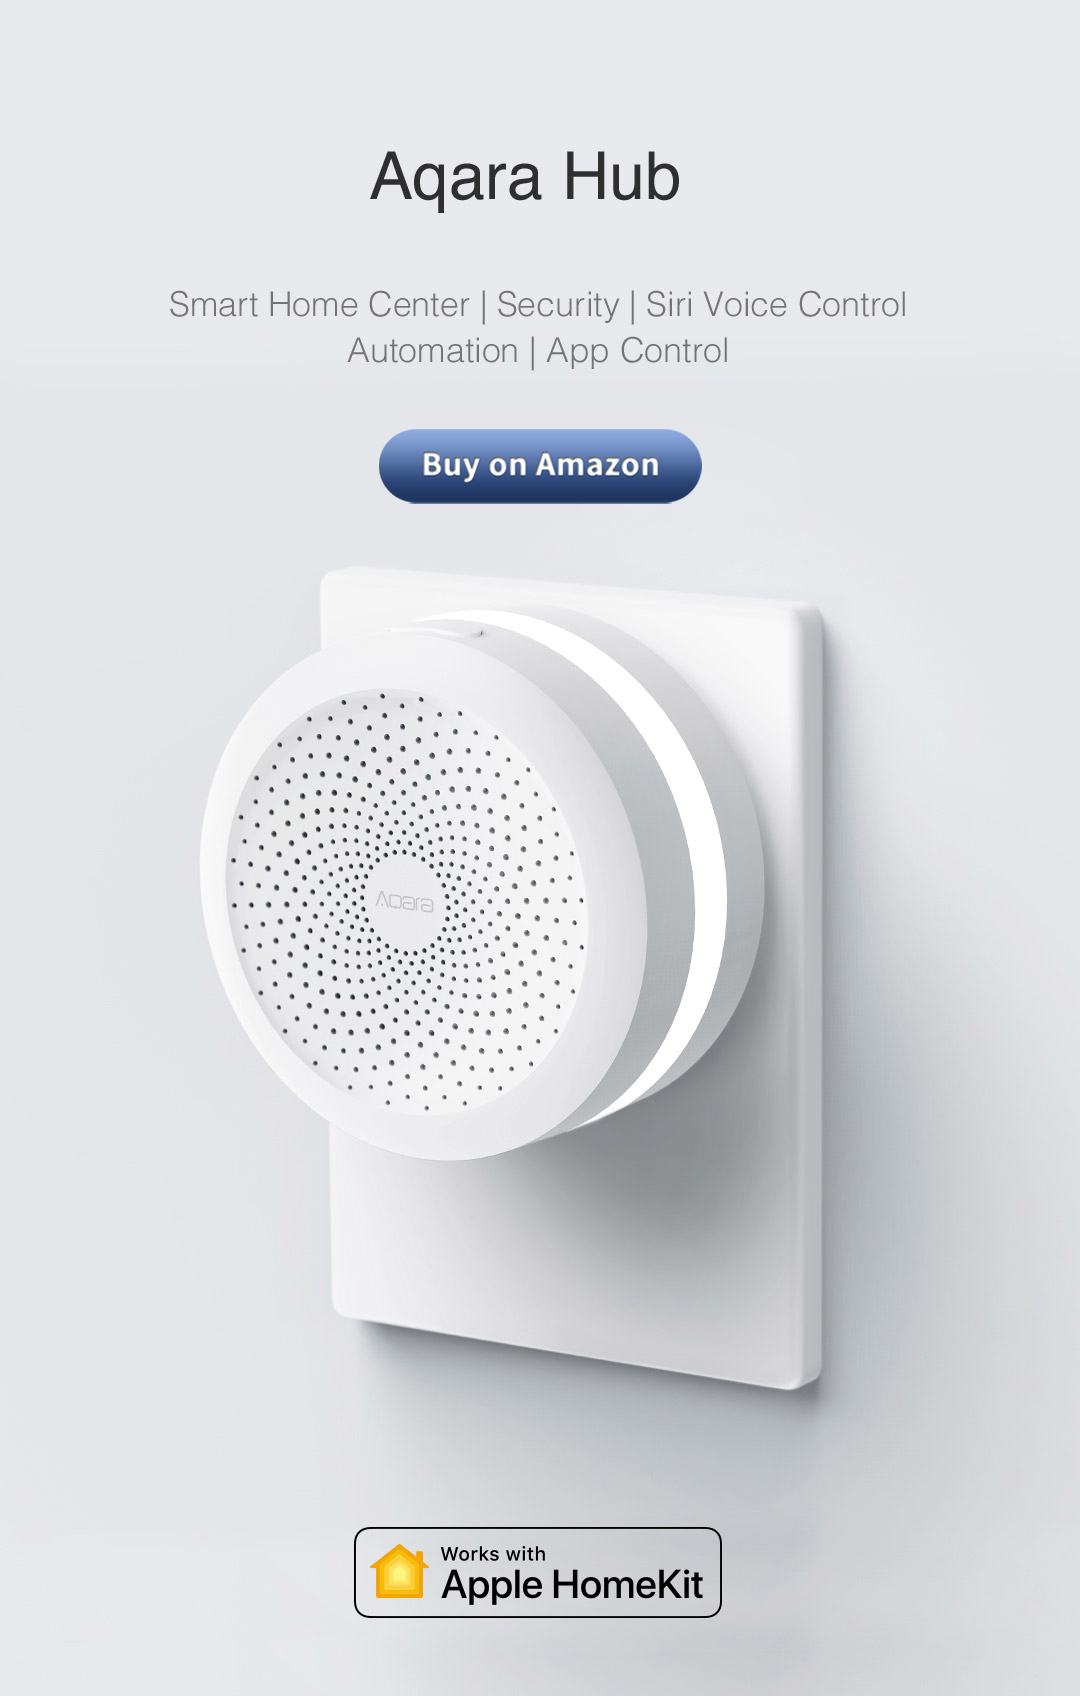 Agara home apple macbook pro warranty information